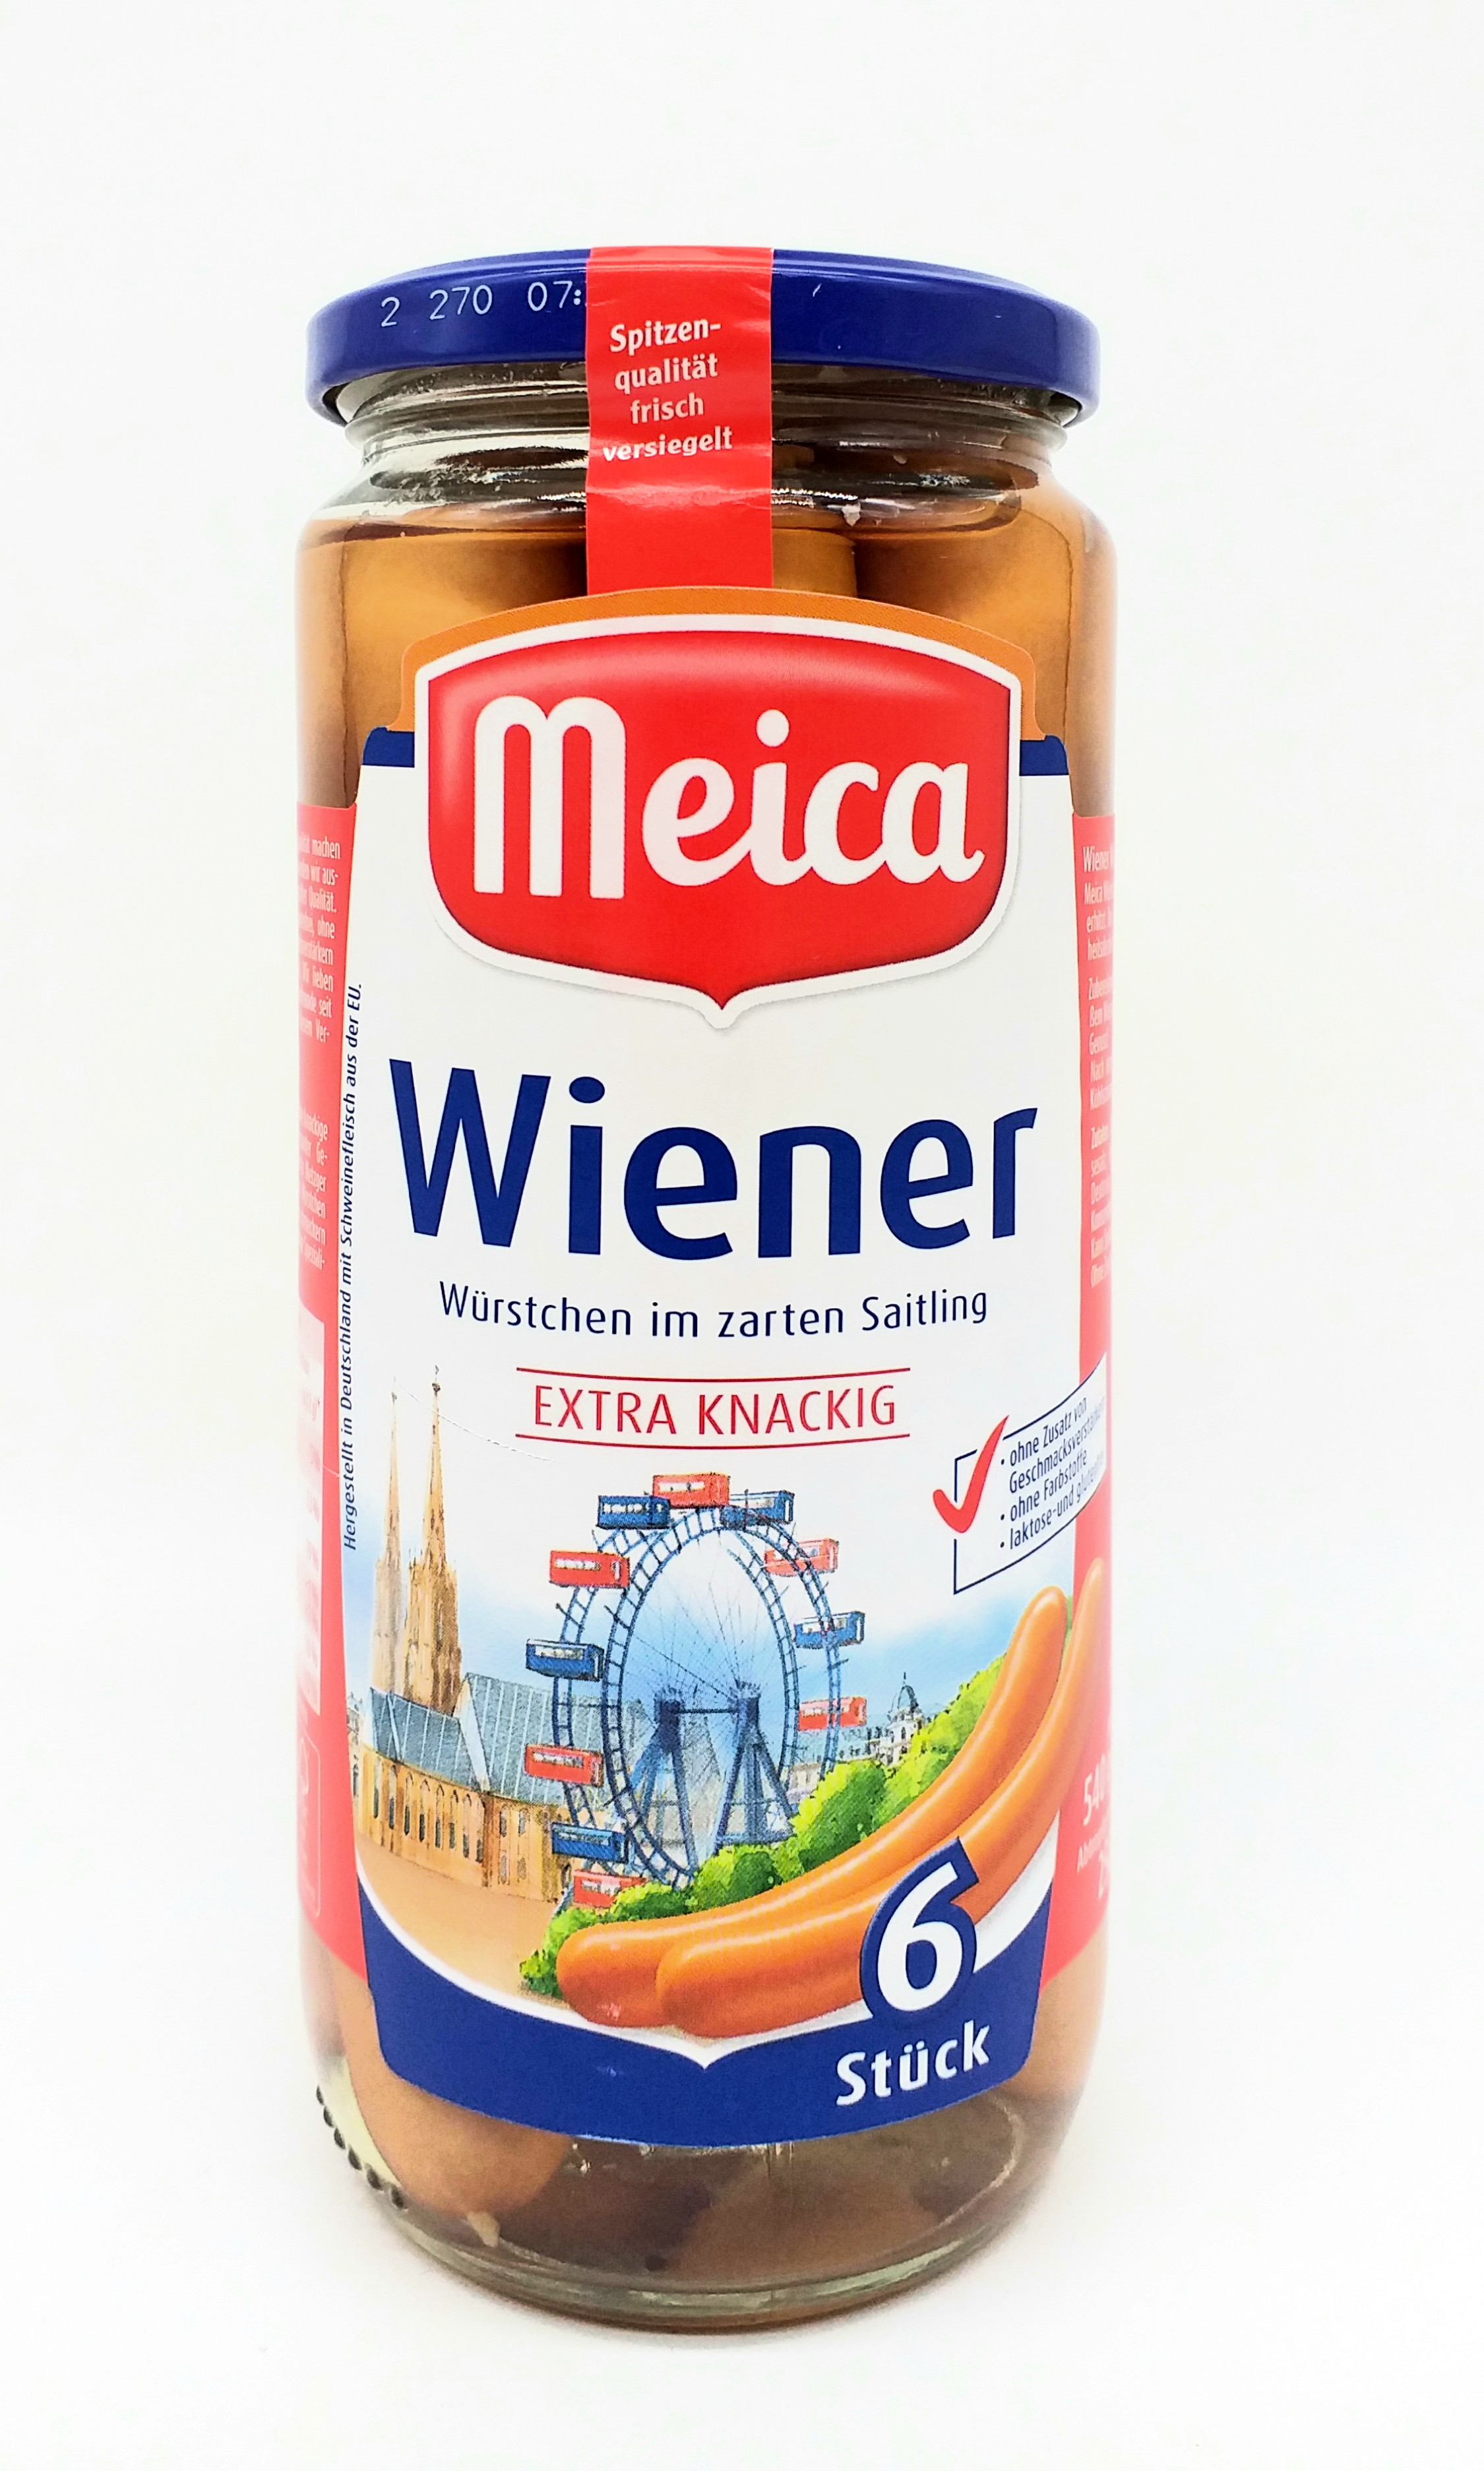 Meica Wiener-Würstchen 6ST knack.250g